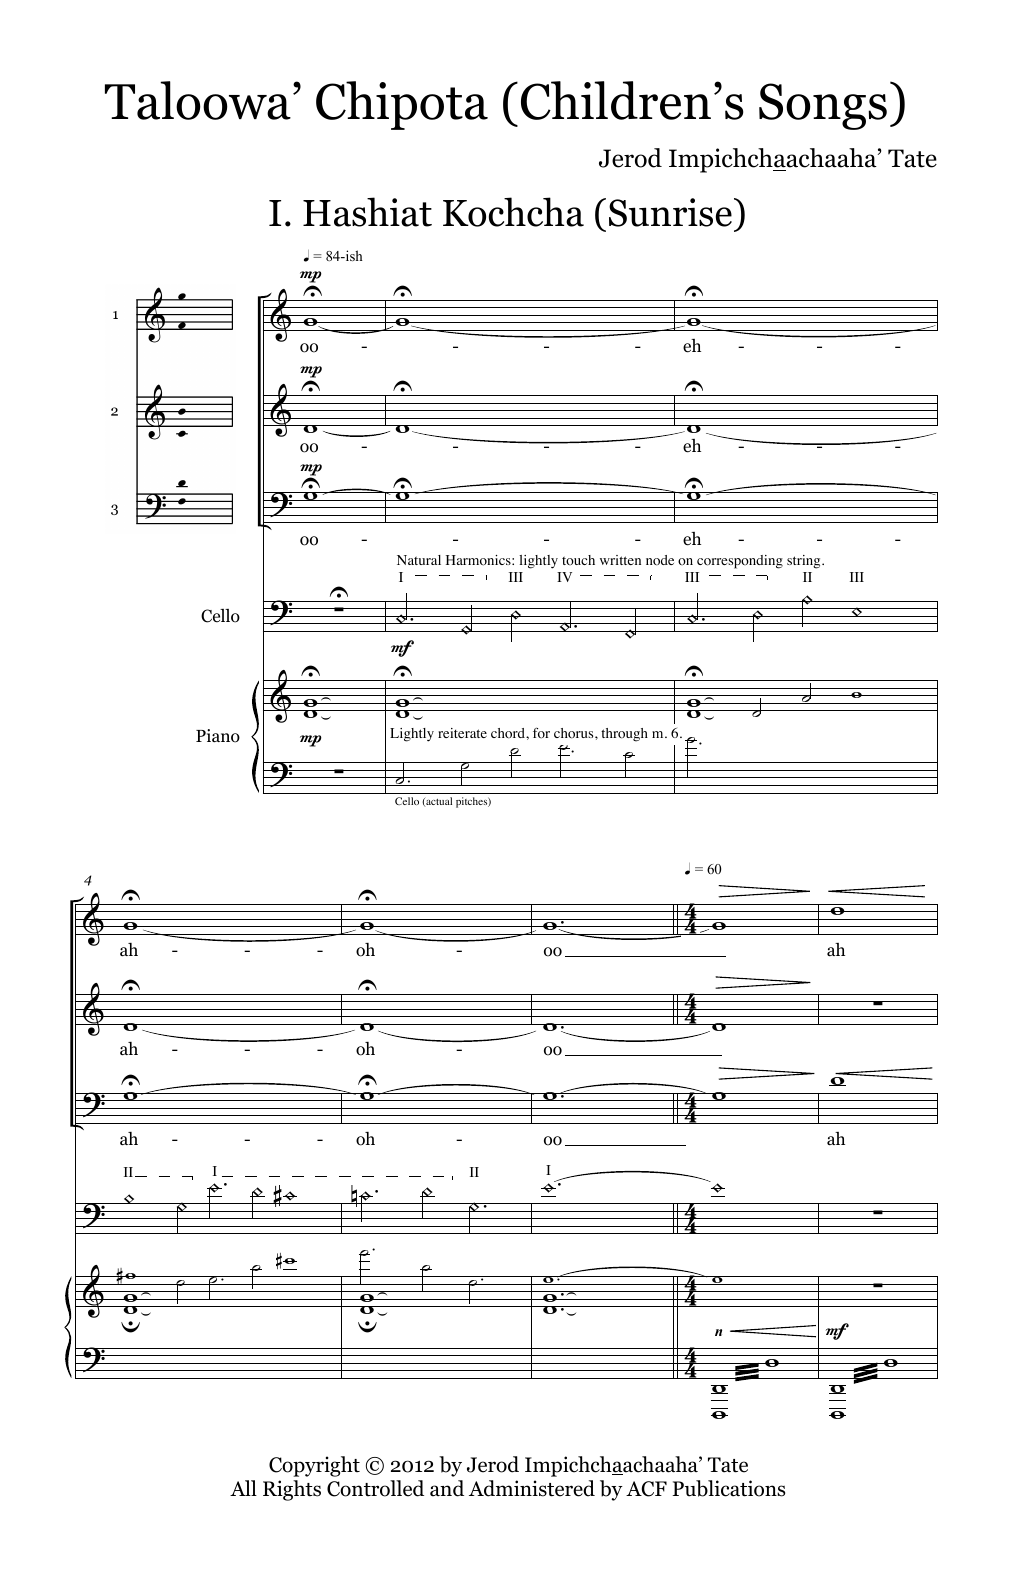 Jerod Impichchaachaaha' Tate Taloowa' Chipota (Children's Songs) Sheet Music Notes & Chords for 3-Part Mixed - Download or Print PDF